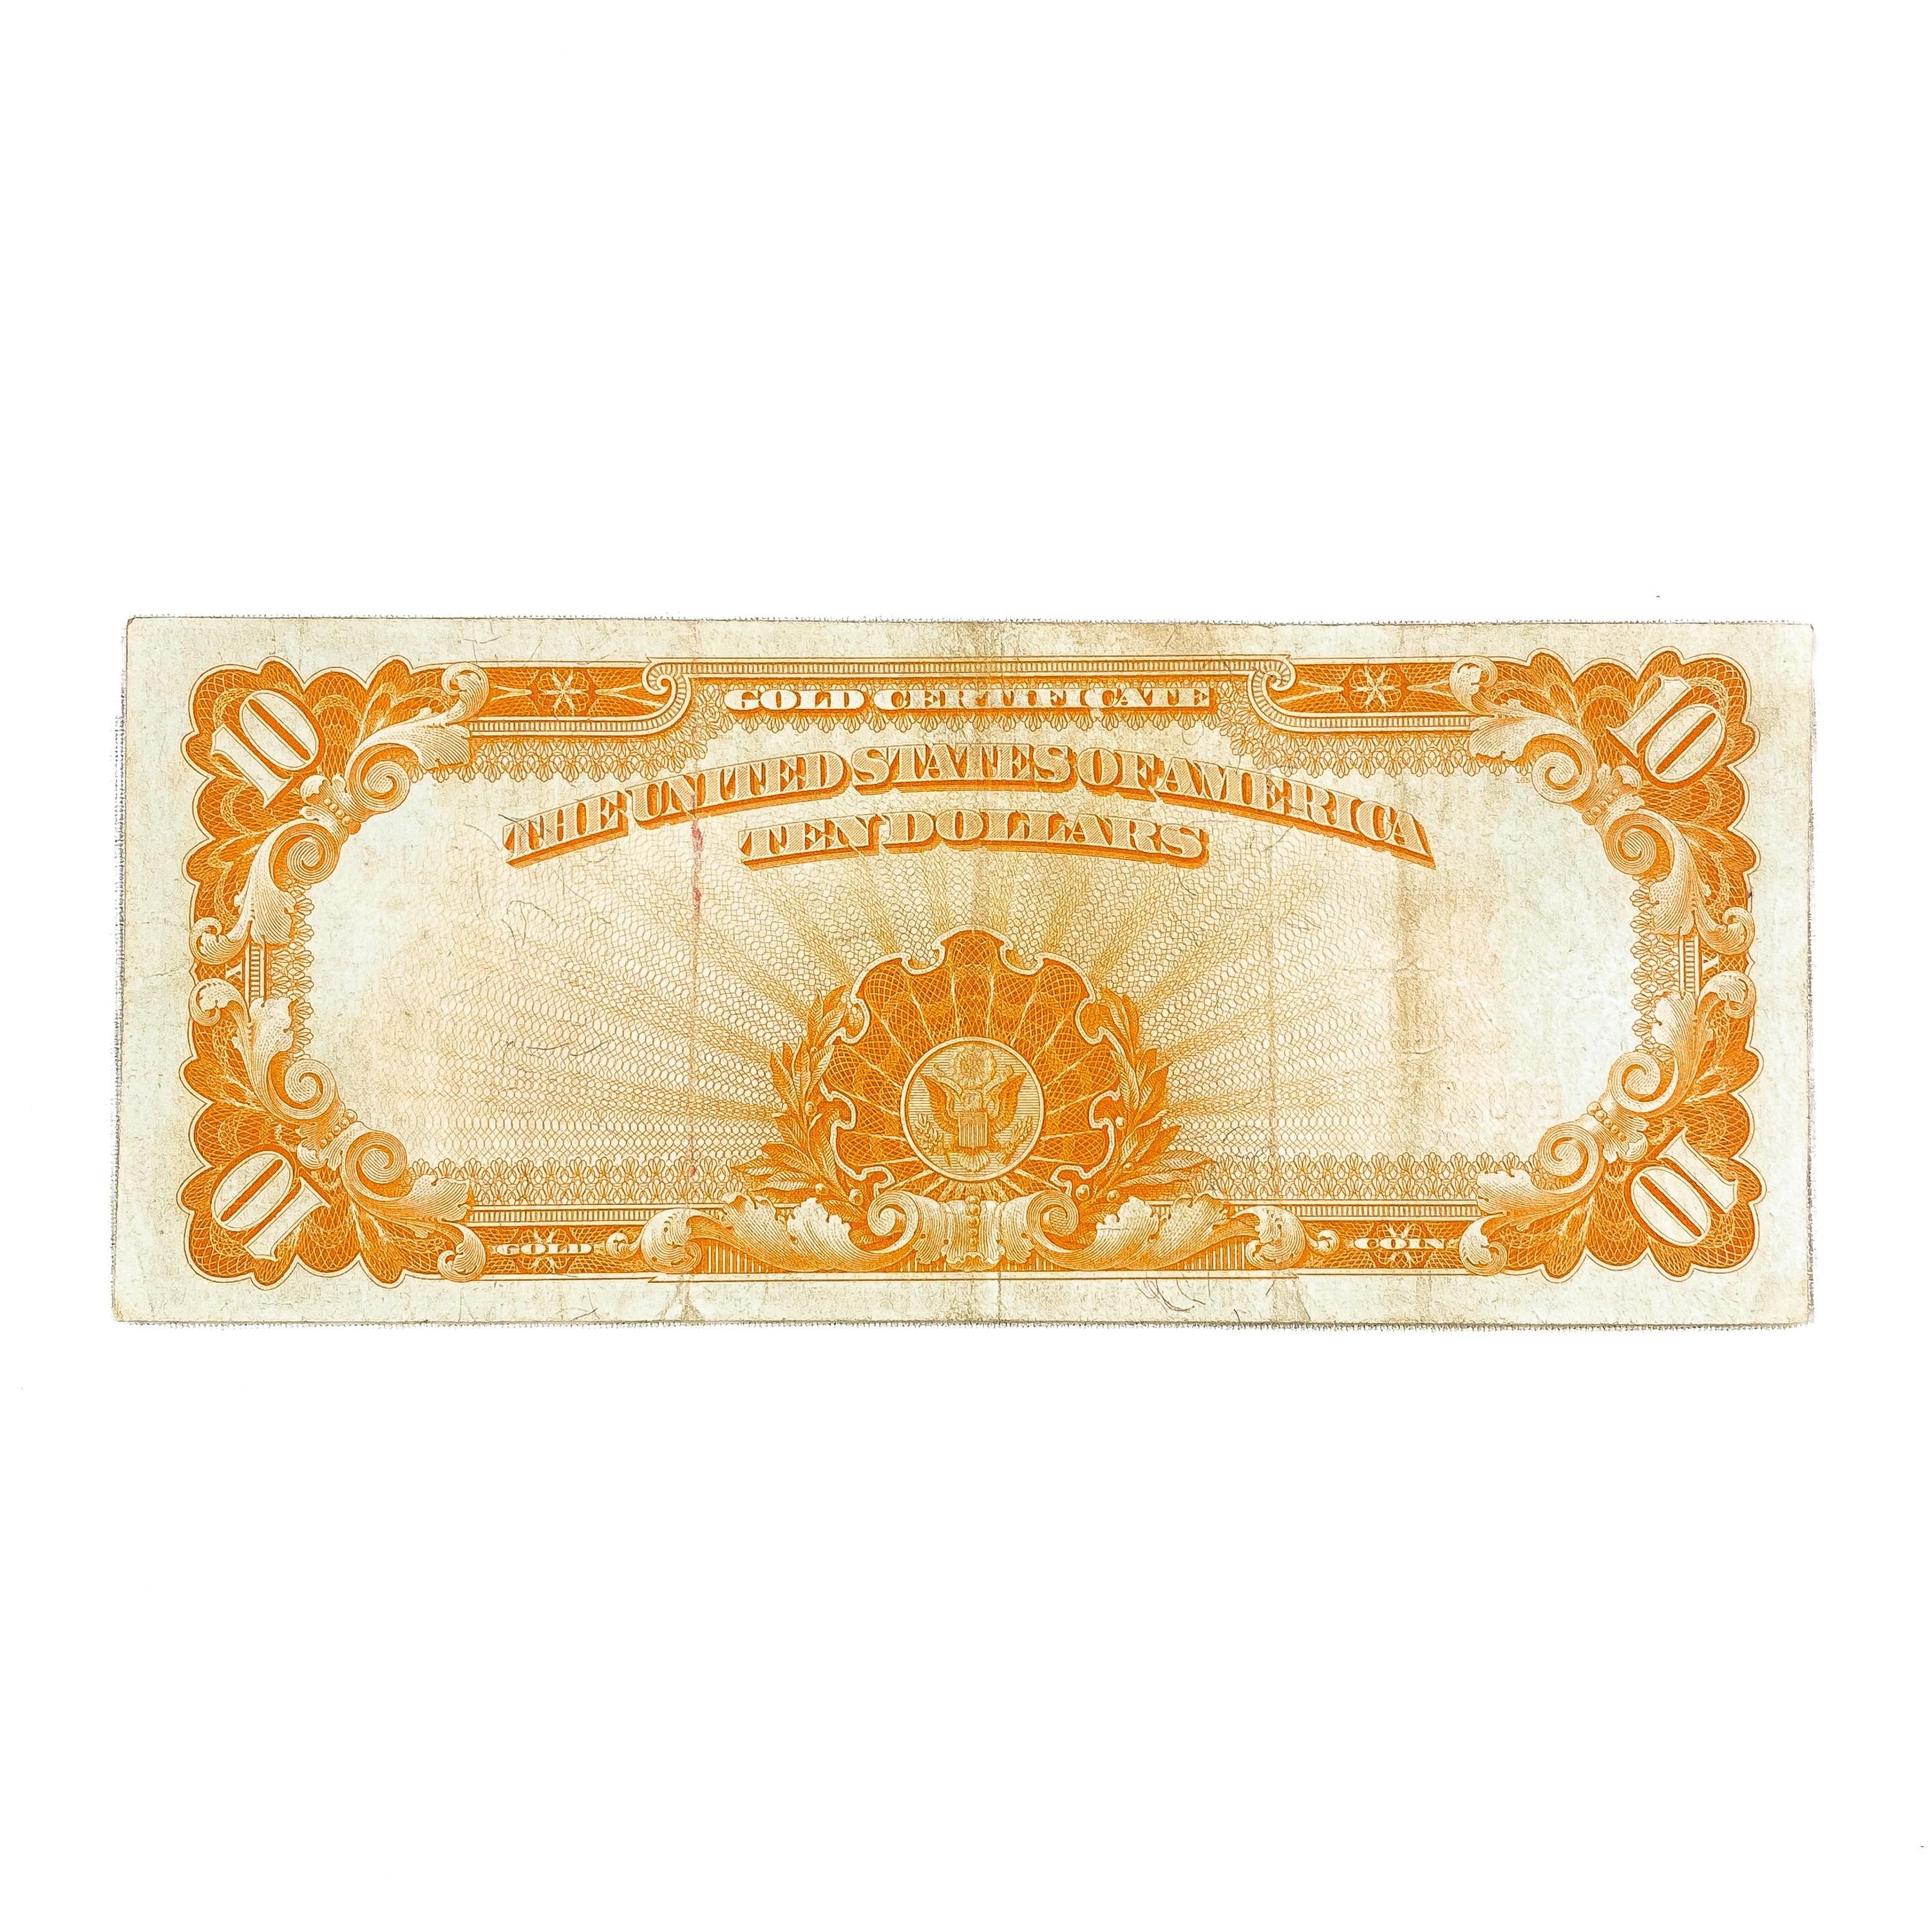 1907 $10 GOLD CERTI. NOTE EF